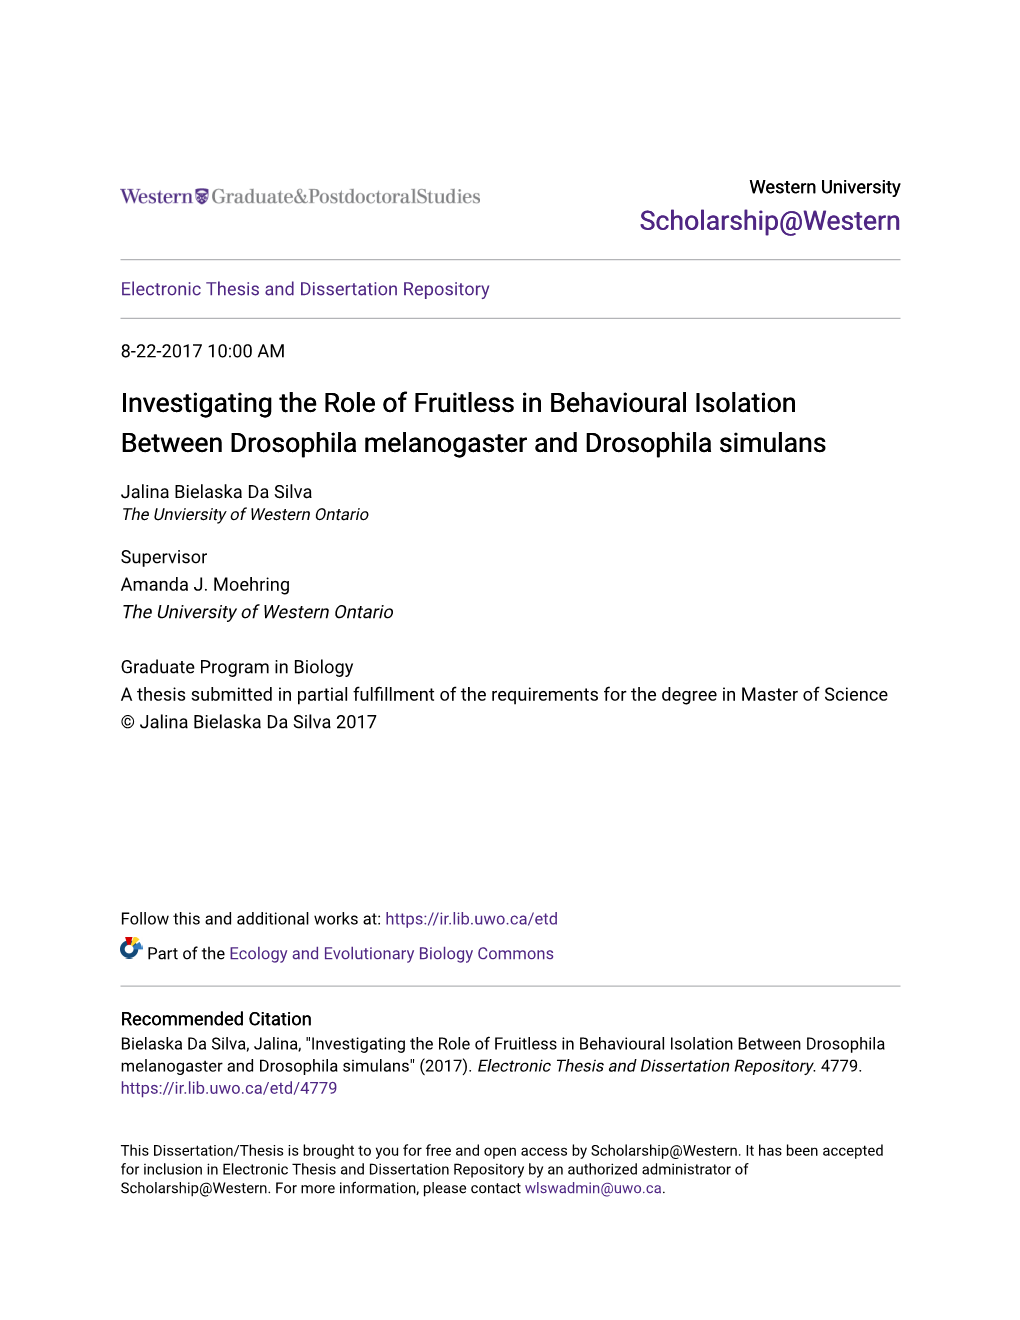 Investigating the Role of Fruitless in Behavioural Isolation Between Drosophila Melanogaster and Drosophila Simulans